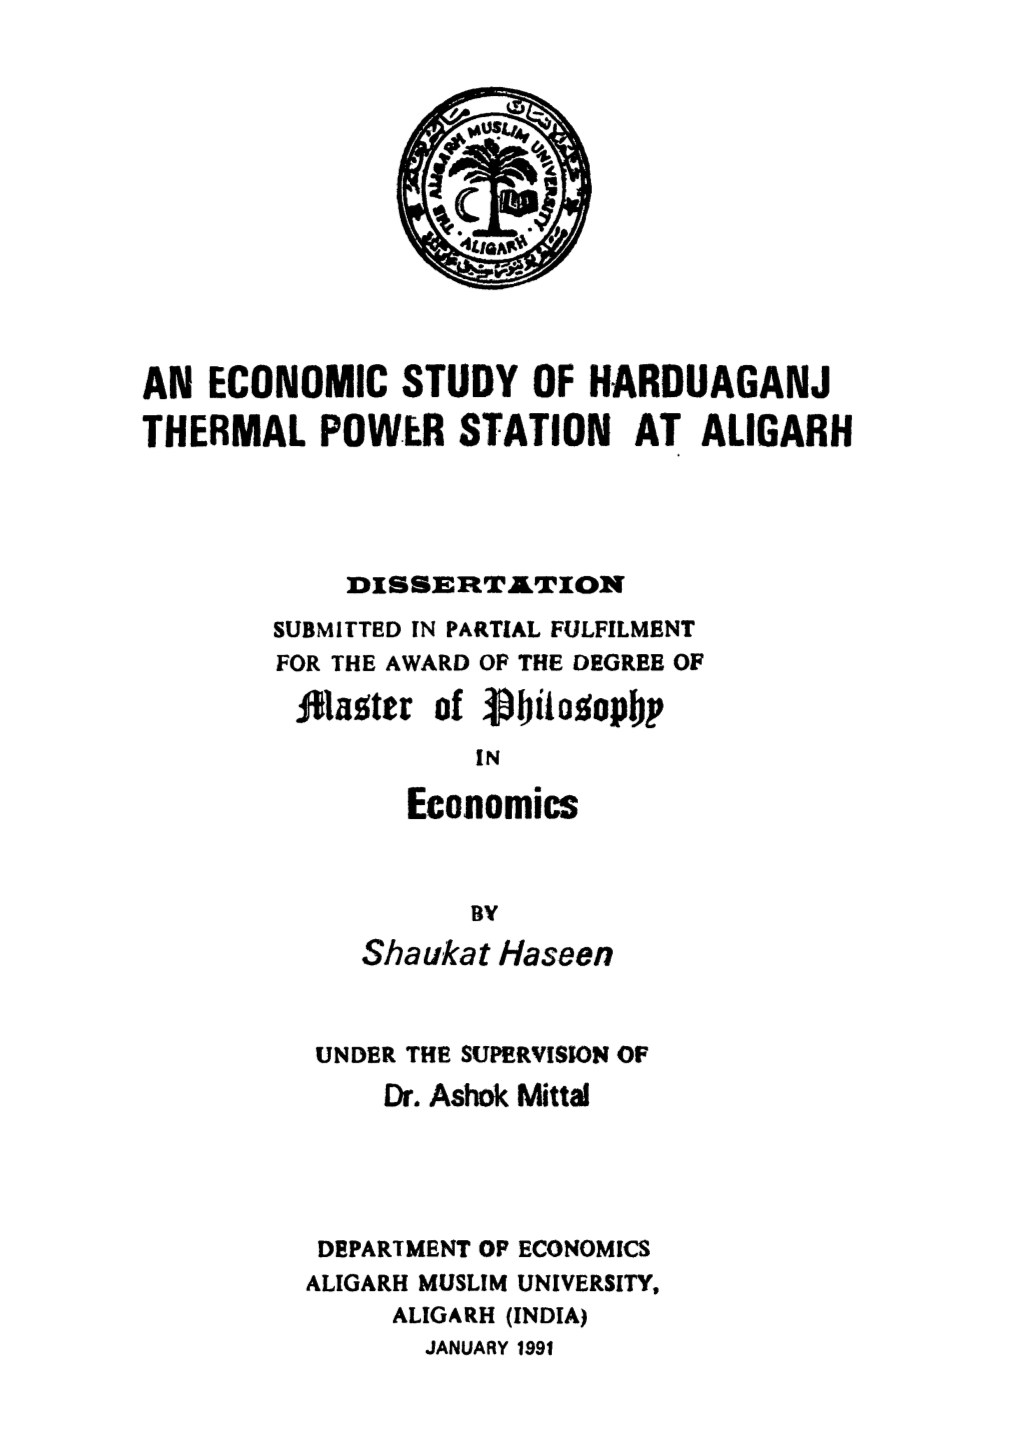 An Economic Study of Harduaganj Thermal Power Station at Augarh